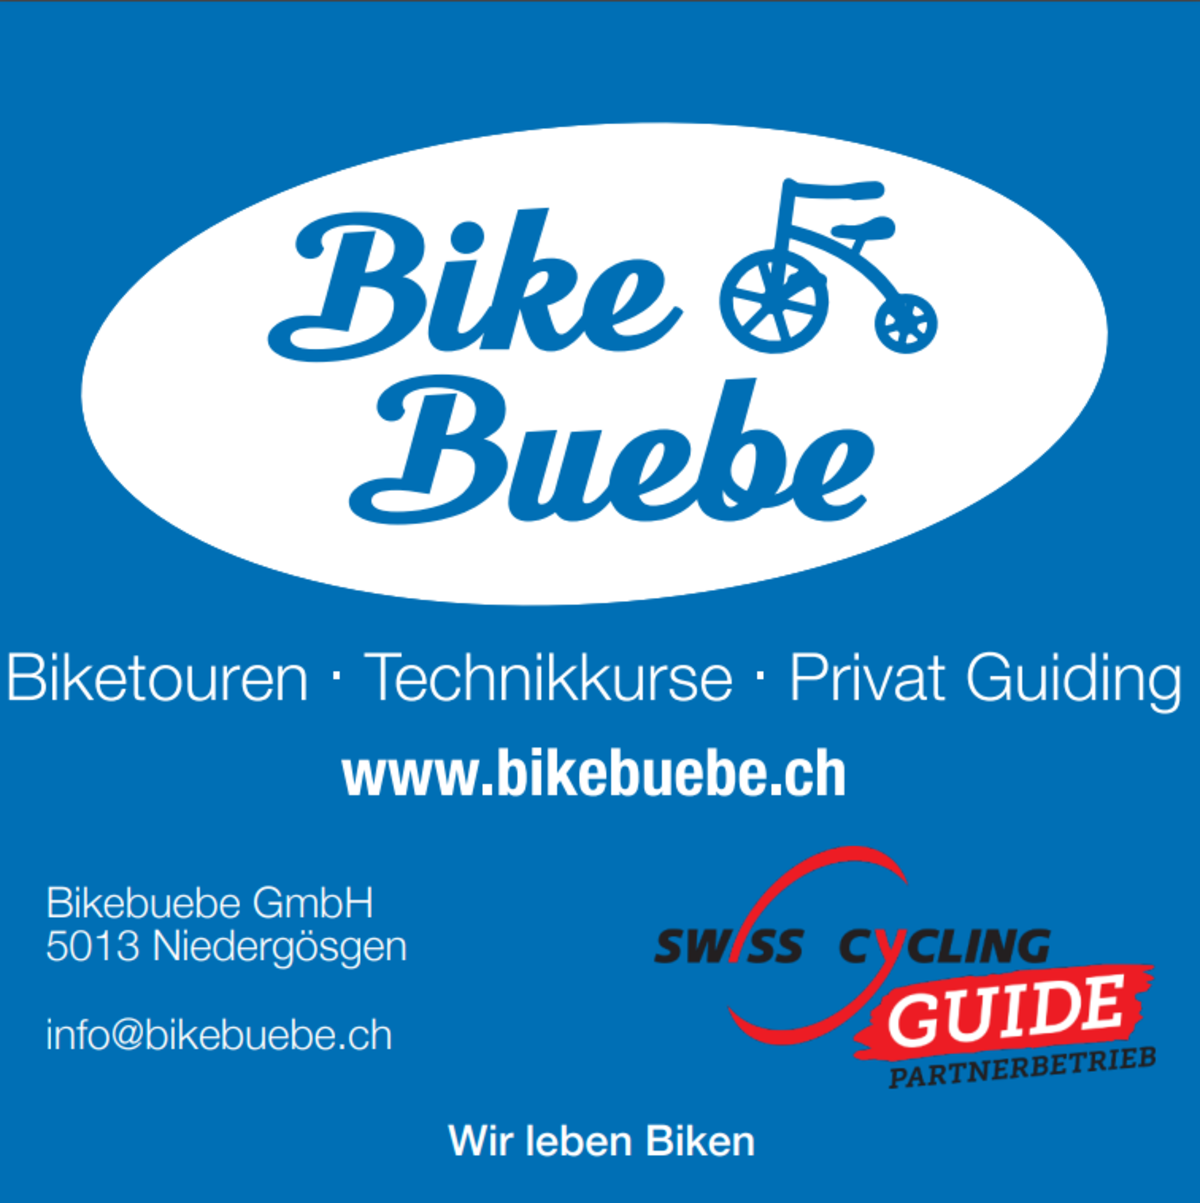 Bikebuebe GmbH